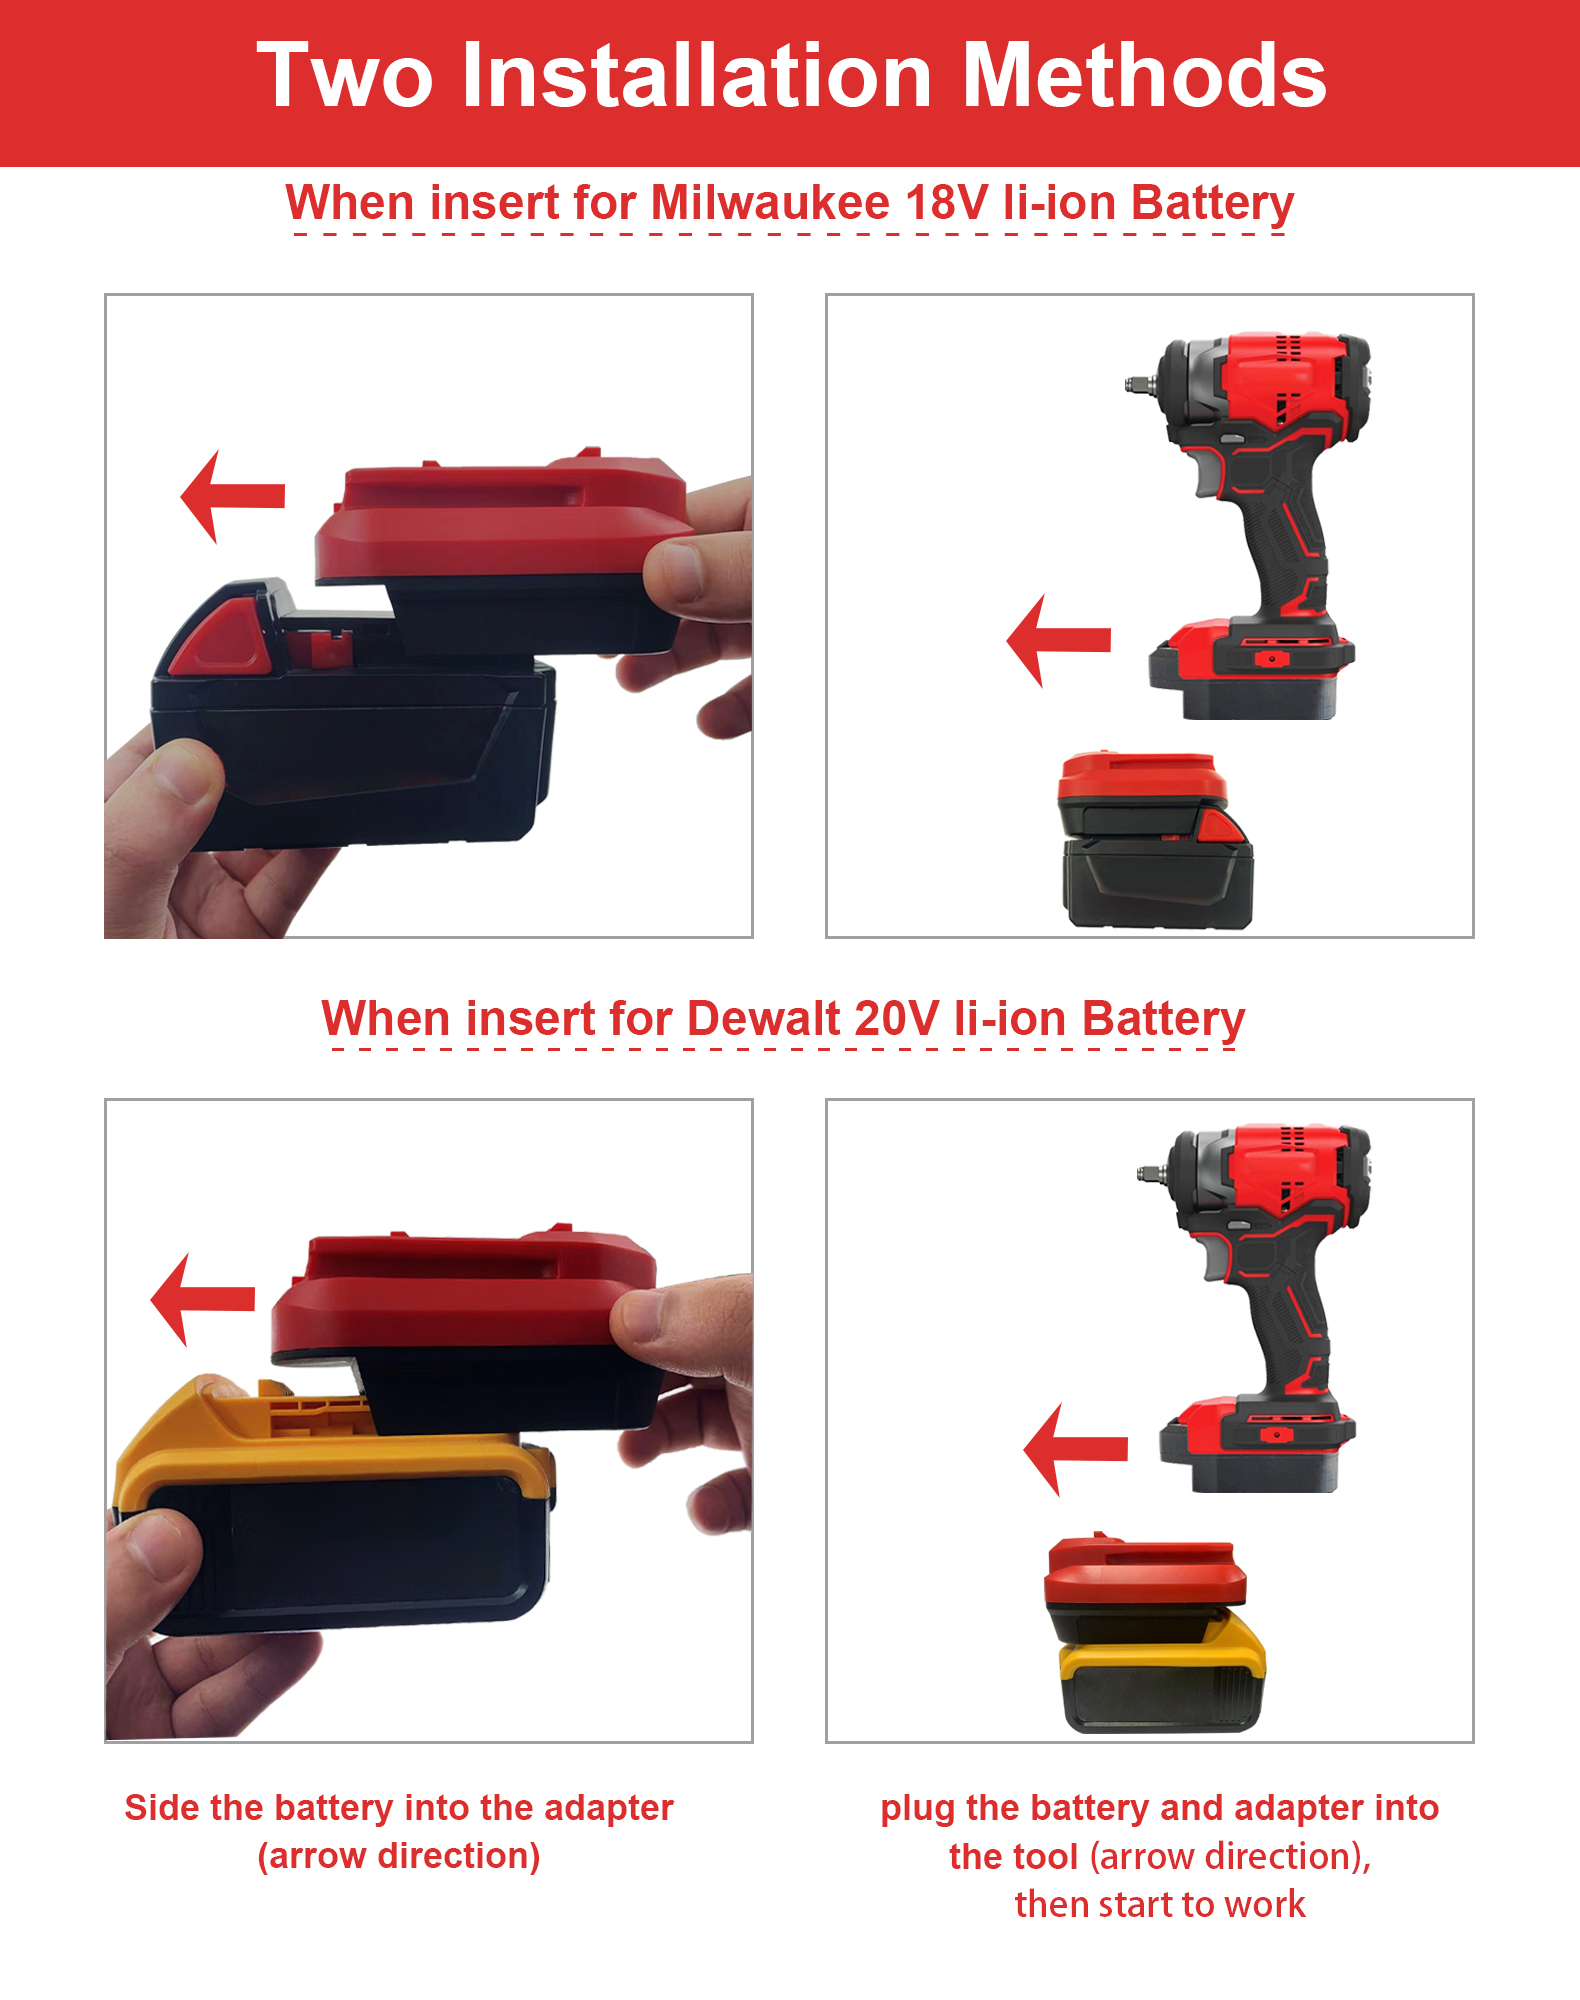 Адаптер за батерии за DeWalt и Milwaukee Lion Battery Convert to Craftsman 20V безжични инструменти